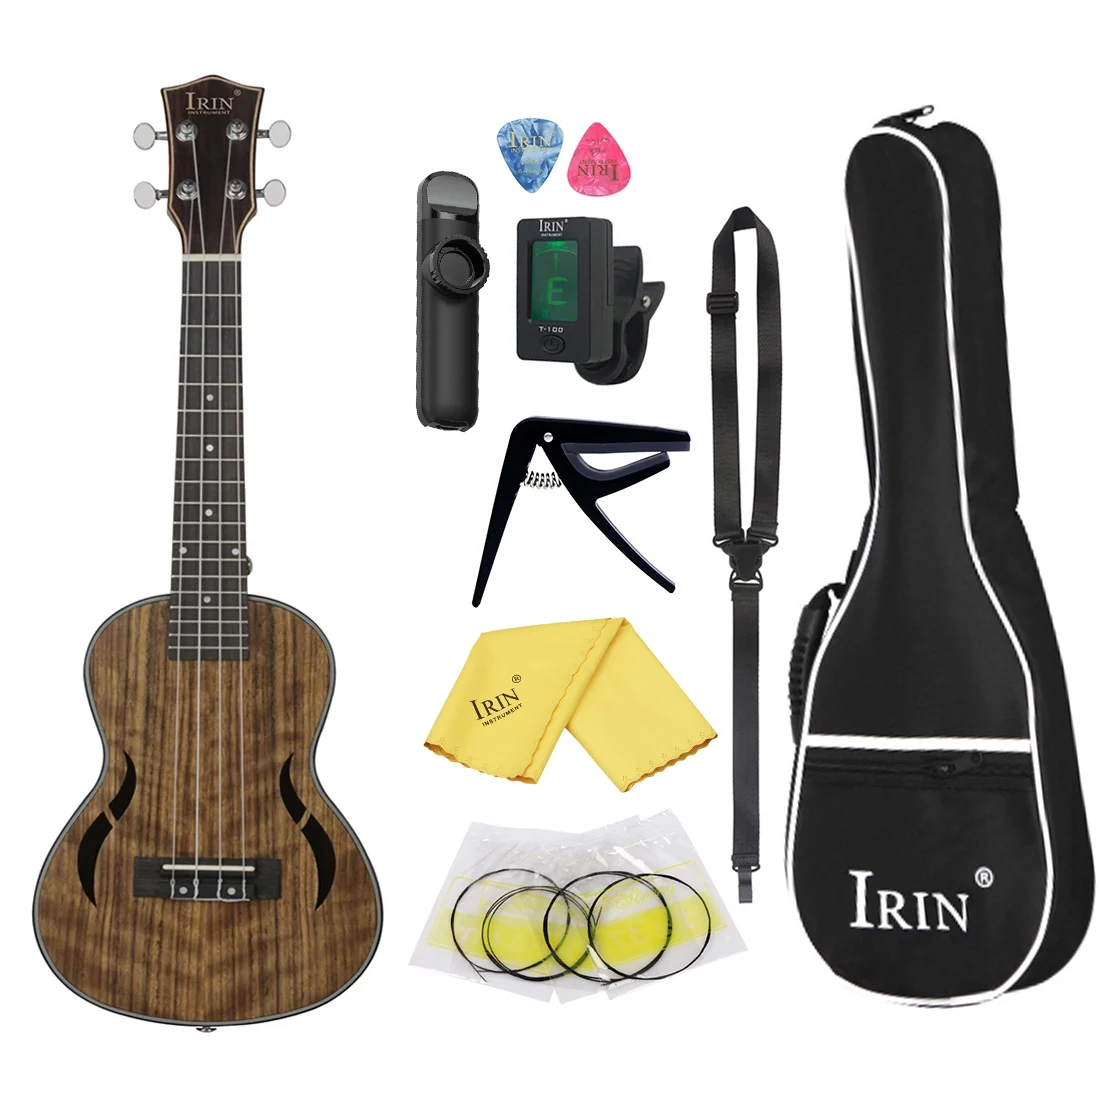 

23 Inch Ukulele Hawaiian Guitar Walnut Body Guitarra Ukulele 4 Strings Ukulele with Tuner Strap Capo Strings Parts & Accessorie